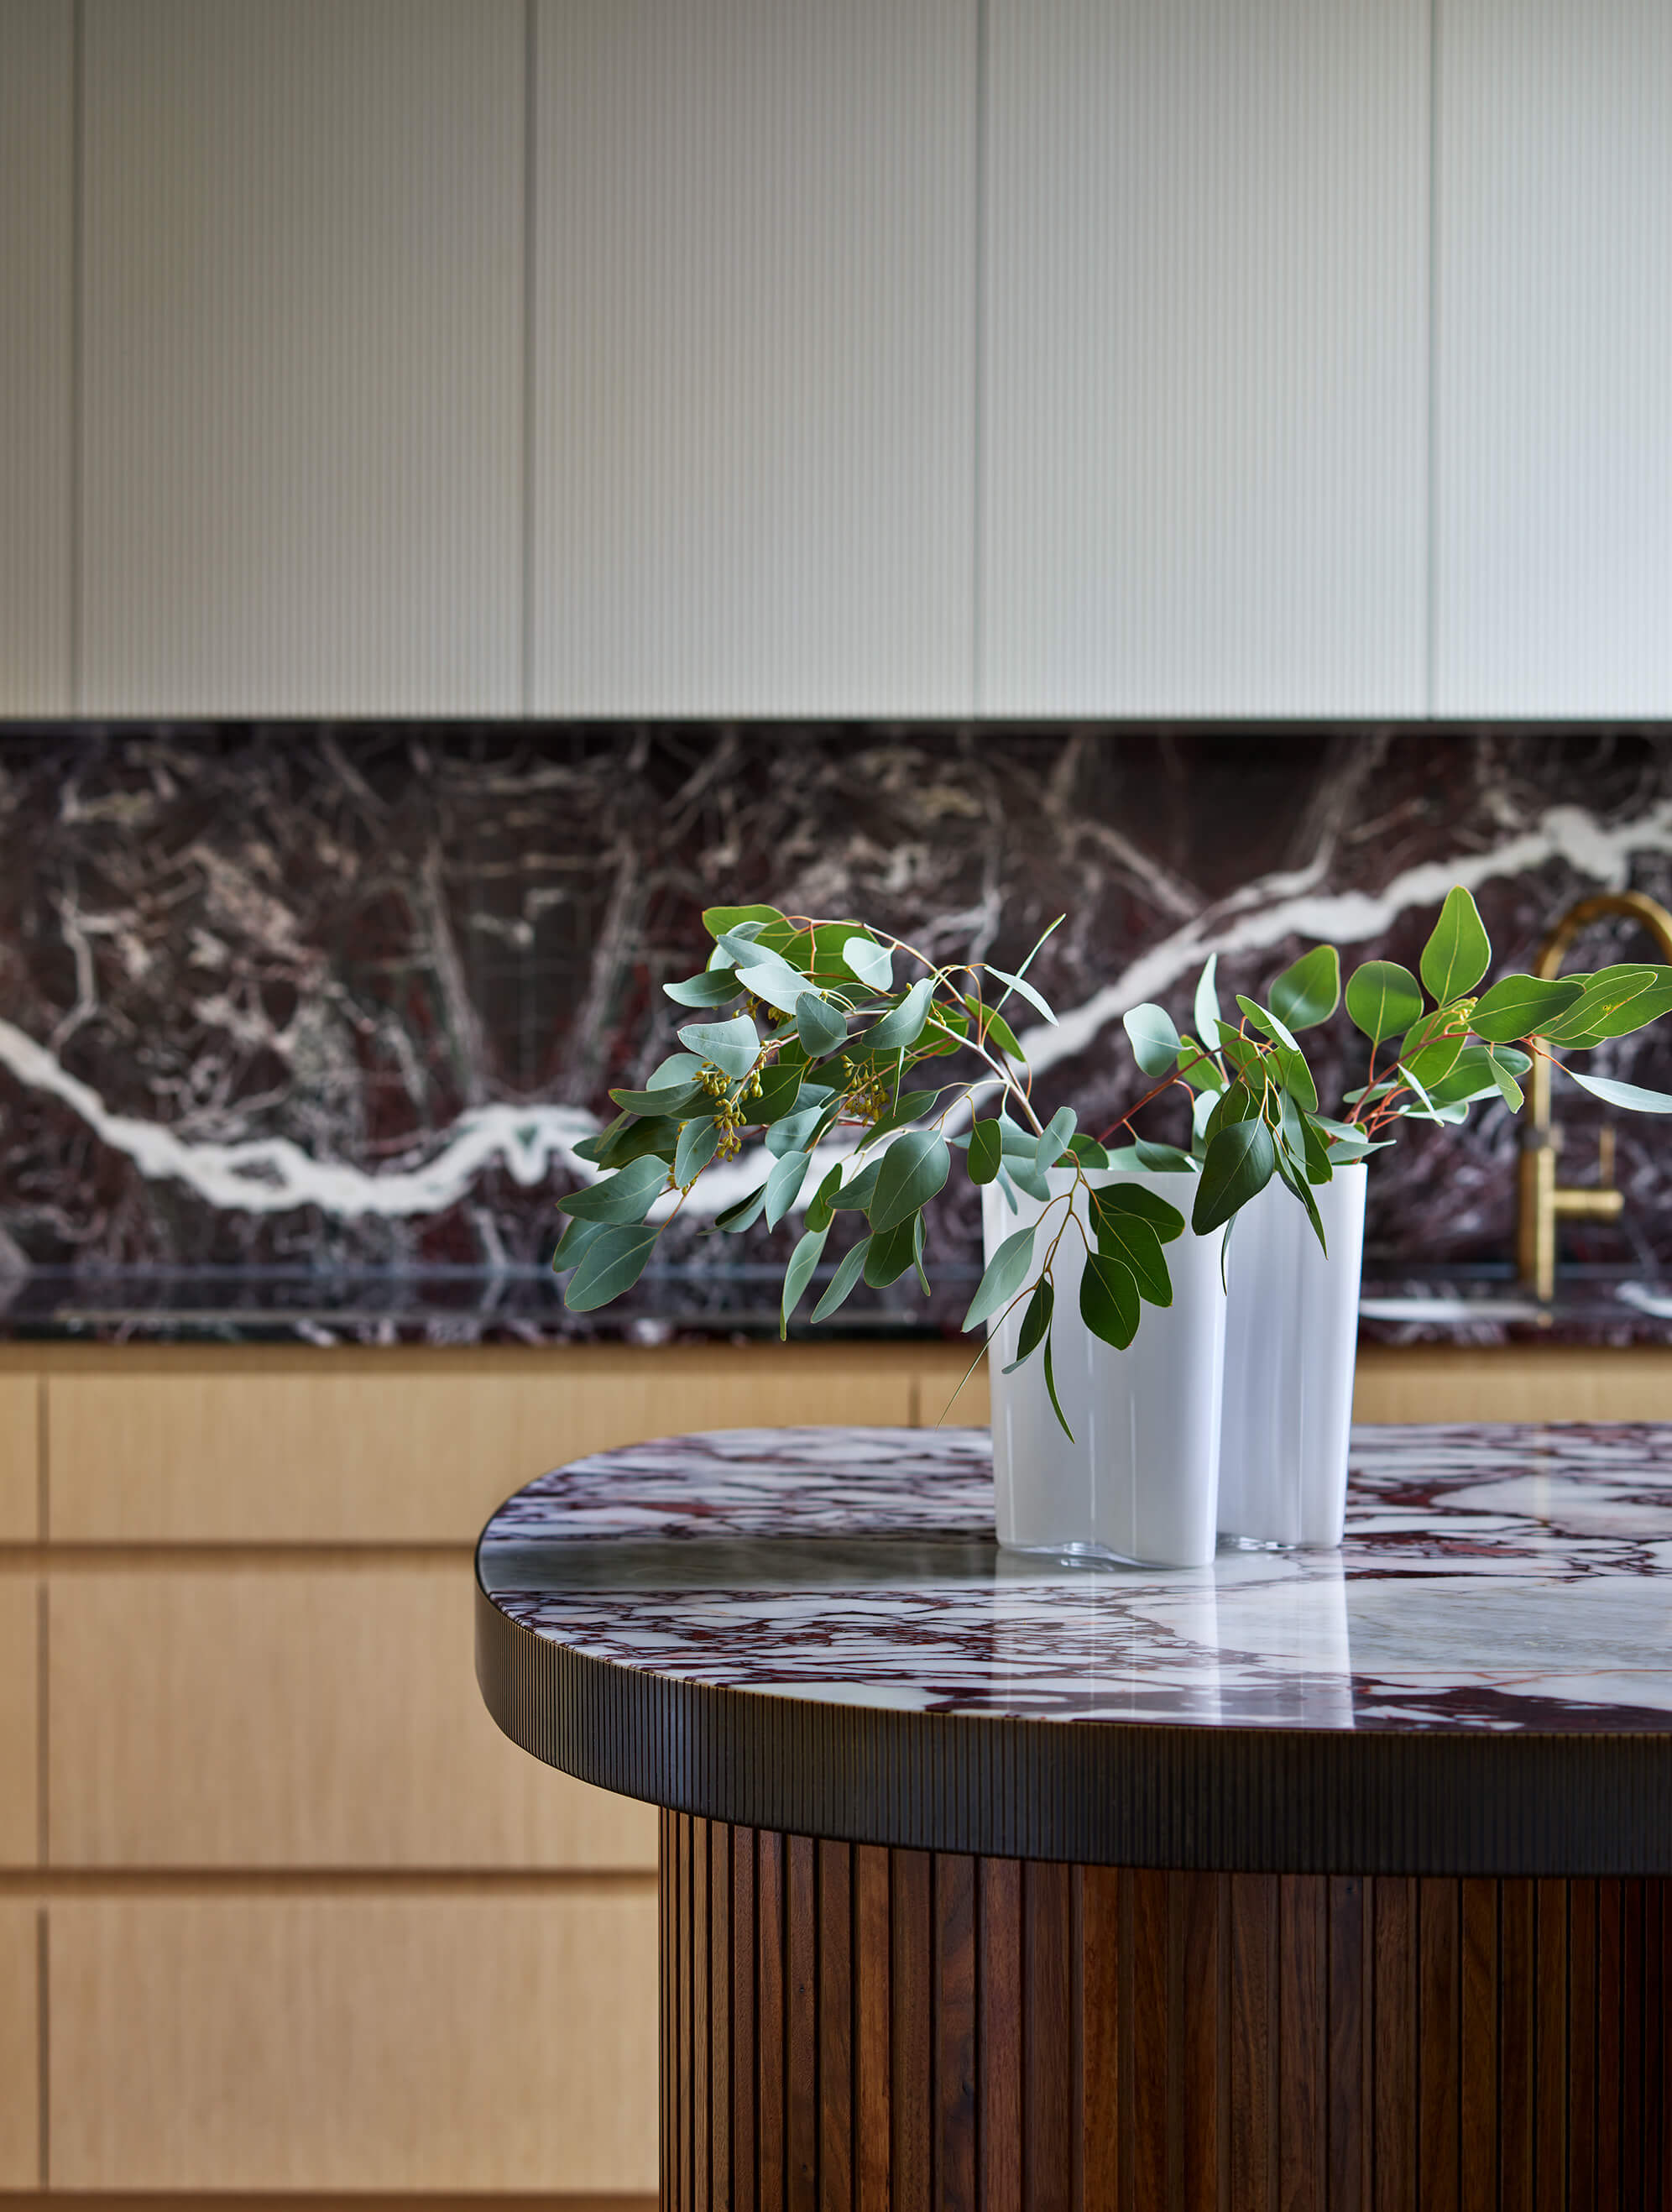 An Alvar Aalto glass vase sitting on the worktop of a kitchen island